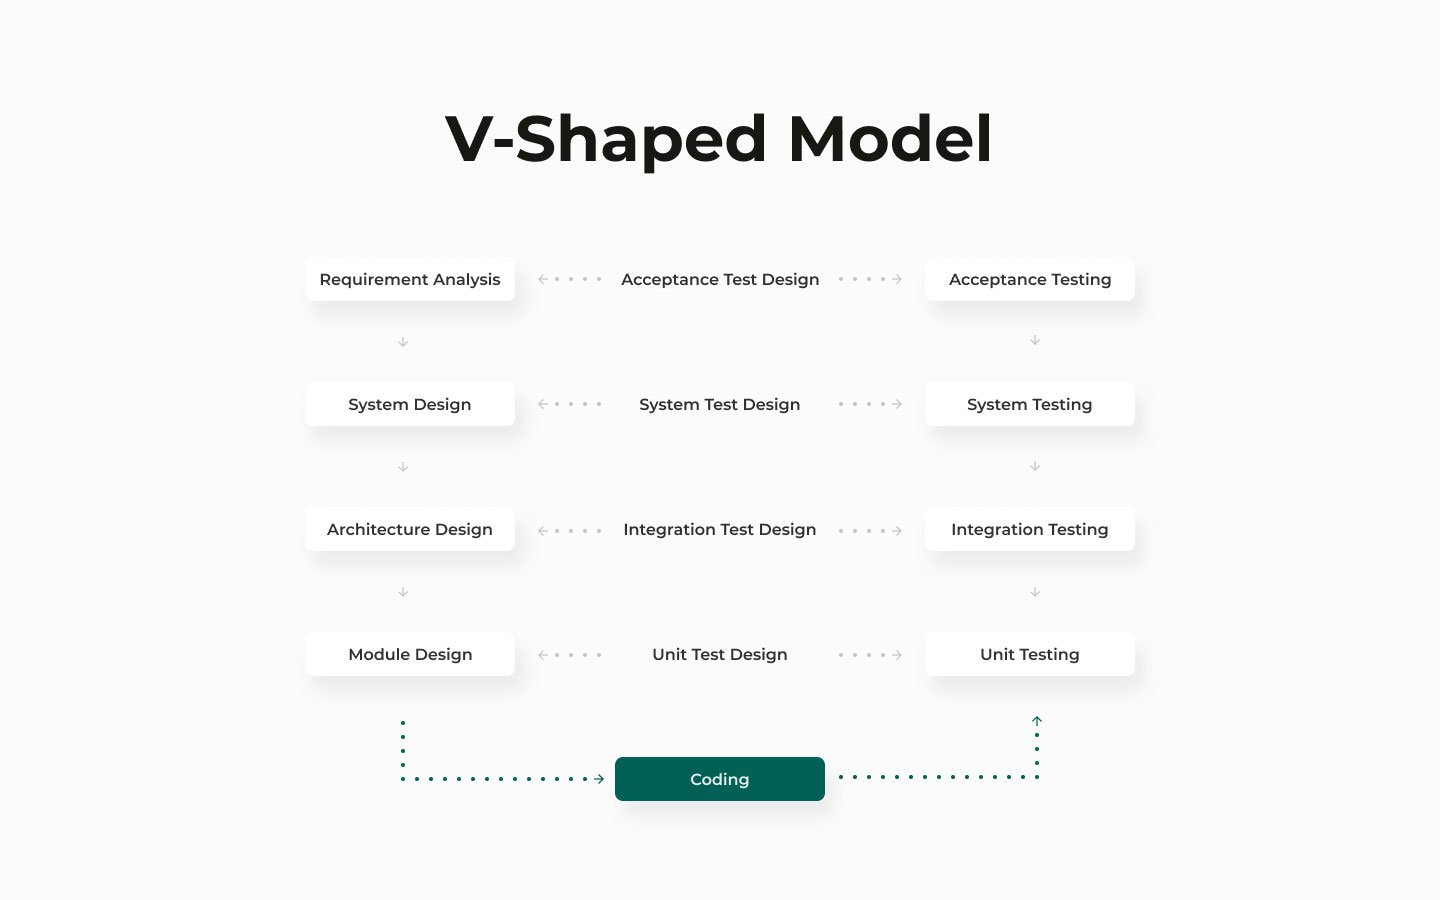 V-Shaped model SDLC approach